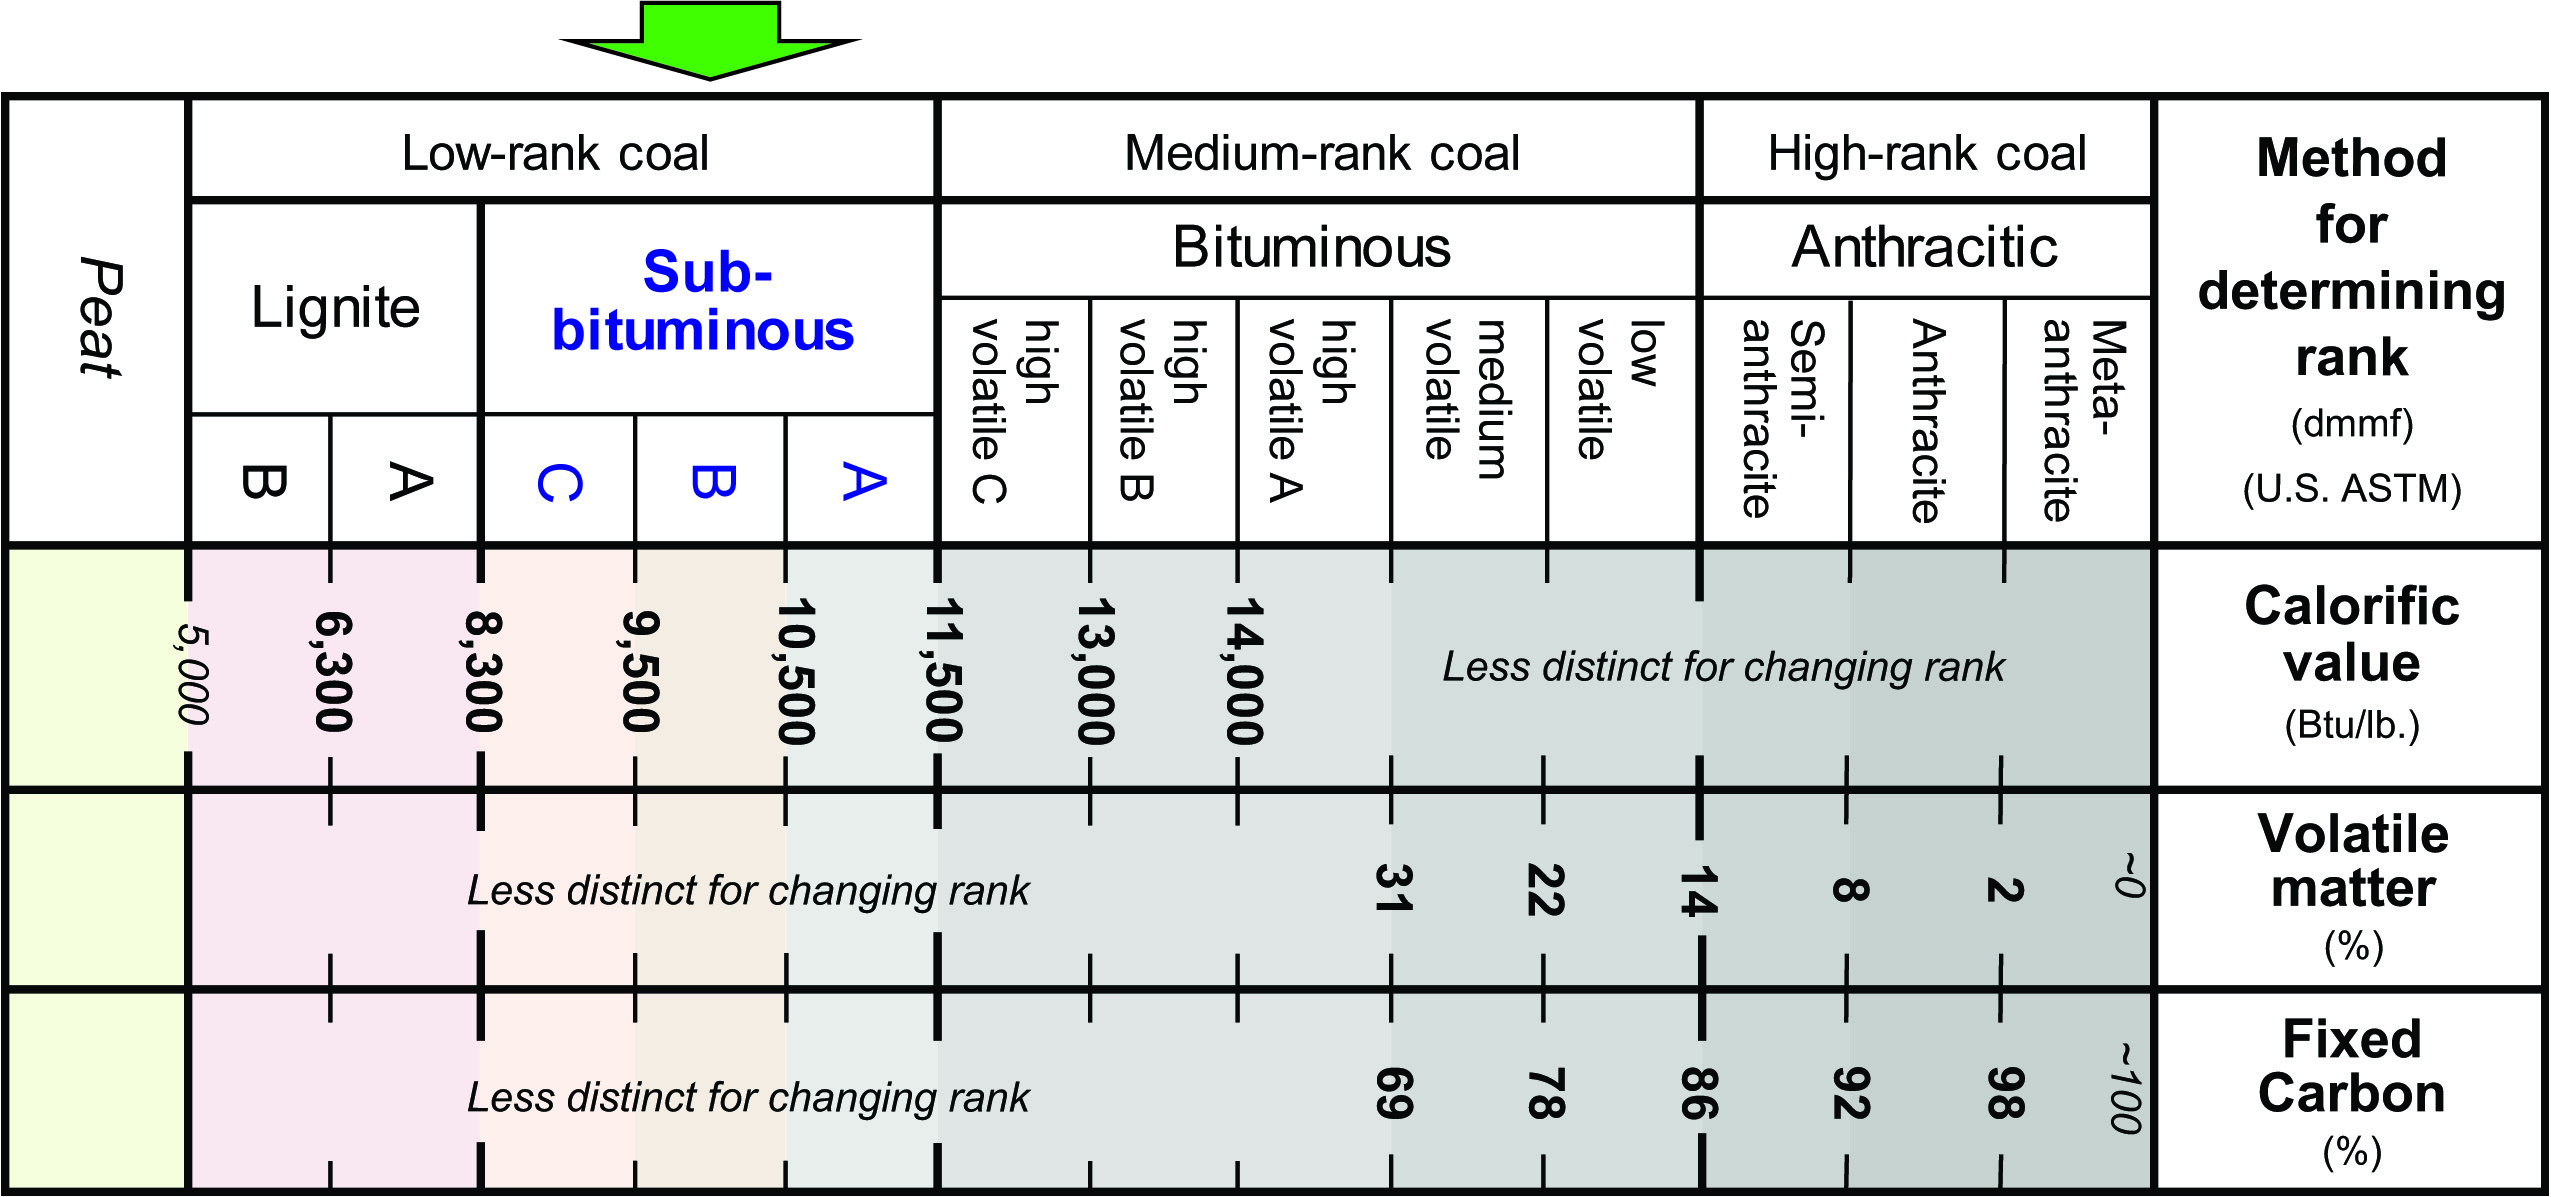 Sub-bituminous rank and defining characteristics.